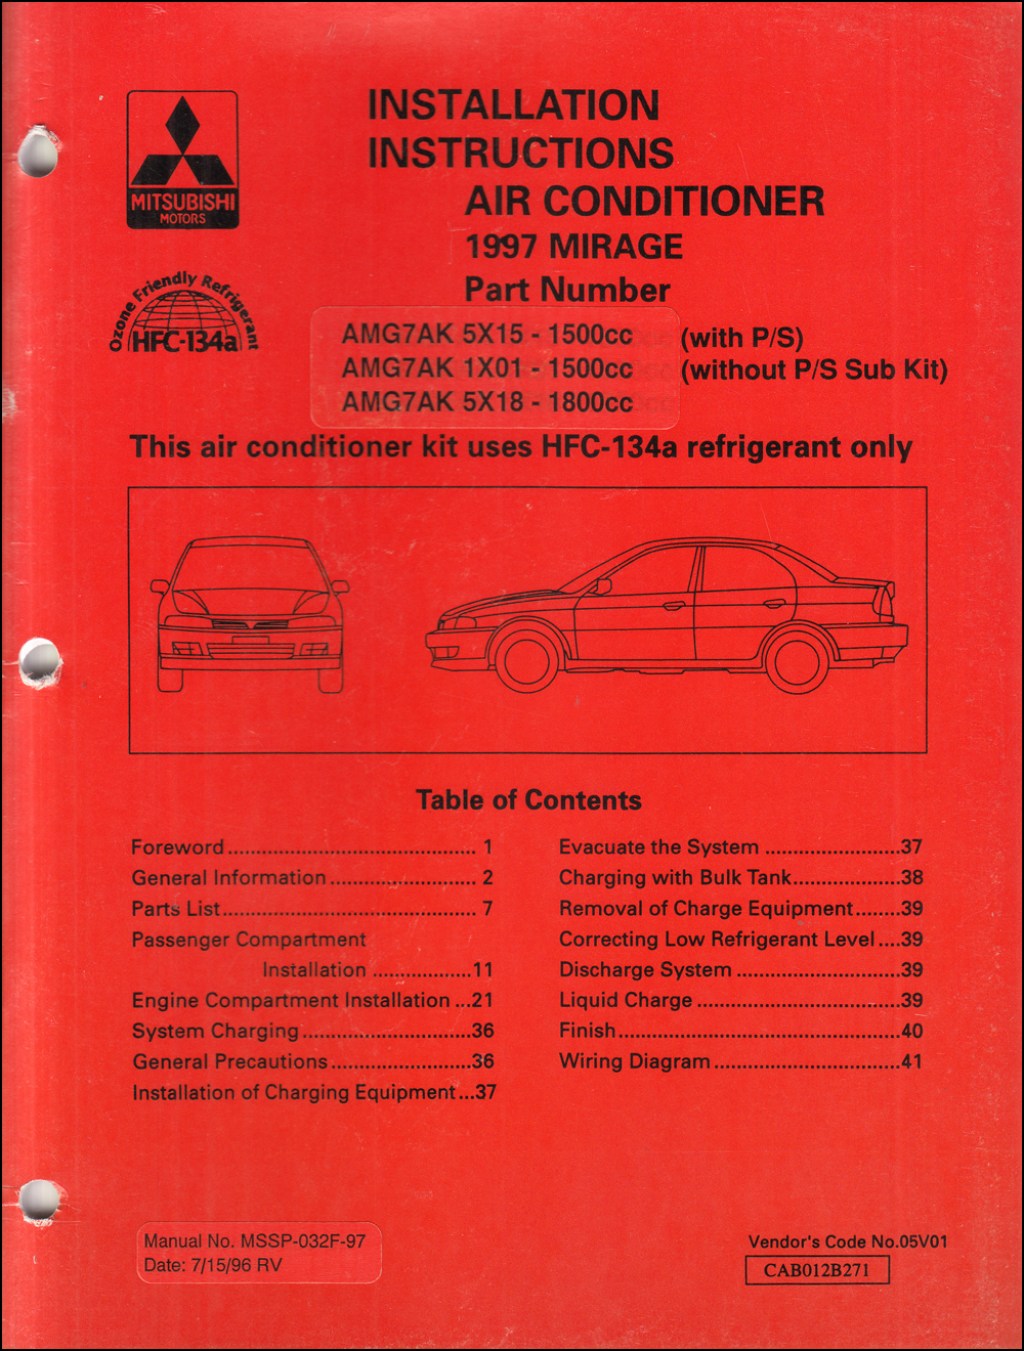 Picture of: Mitsubishi Mirage Air Conditioner Installation Instruction